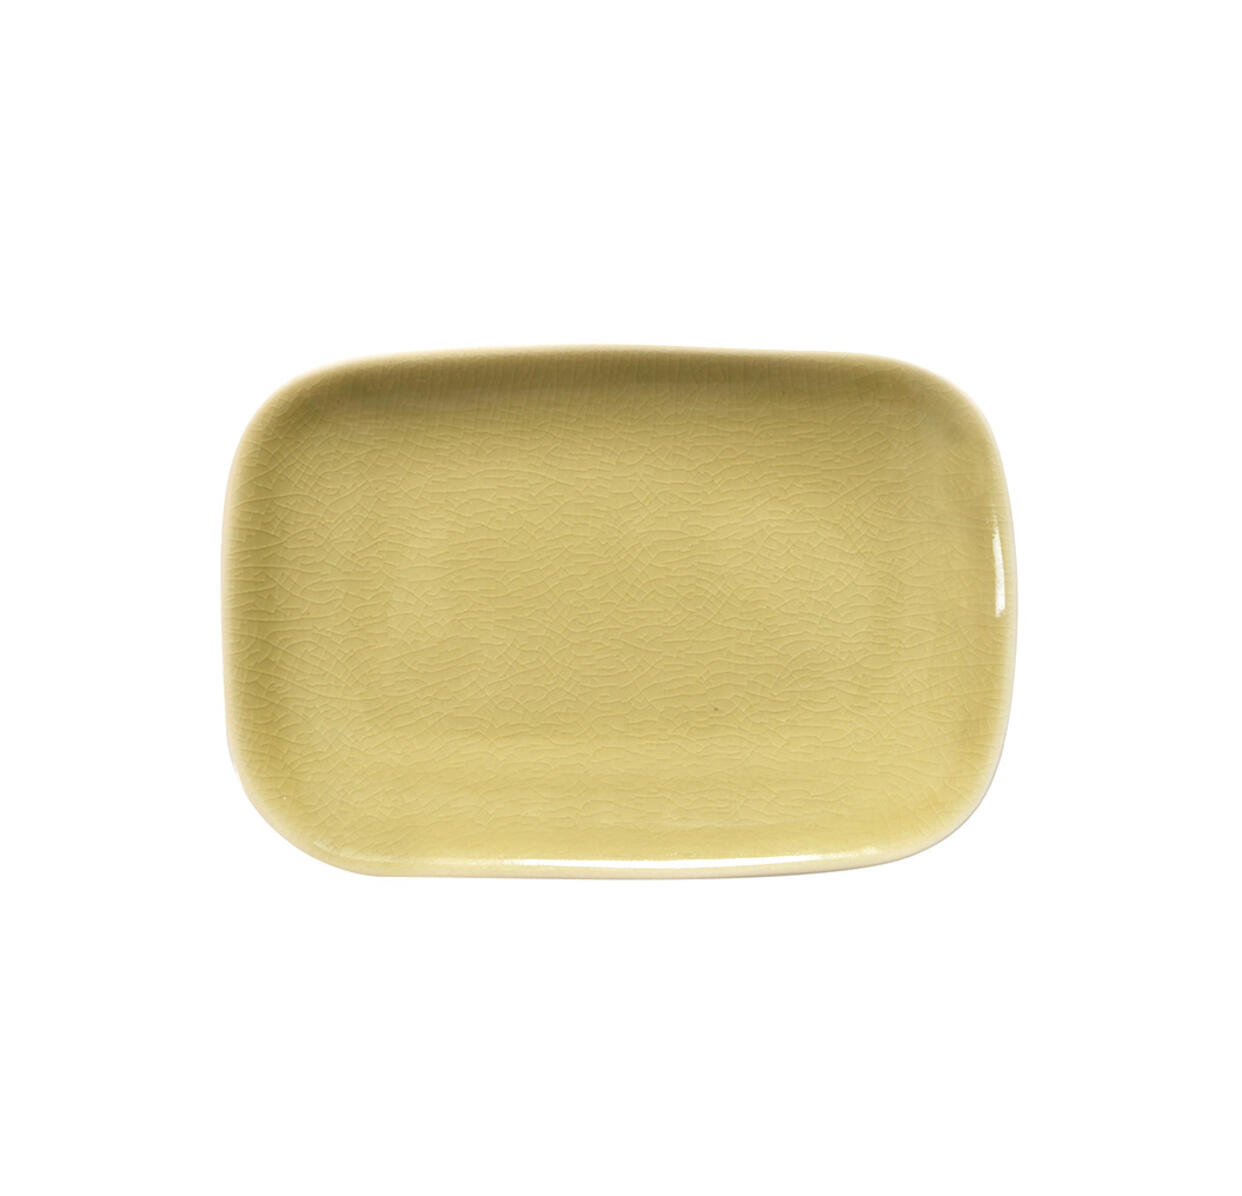 rectangle s maguelone genet ceramic manufacturer